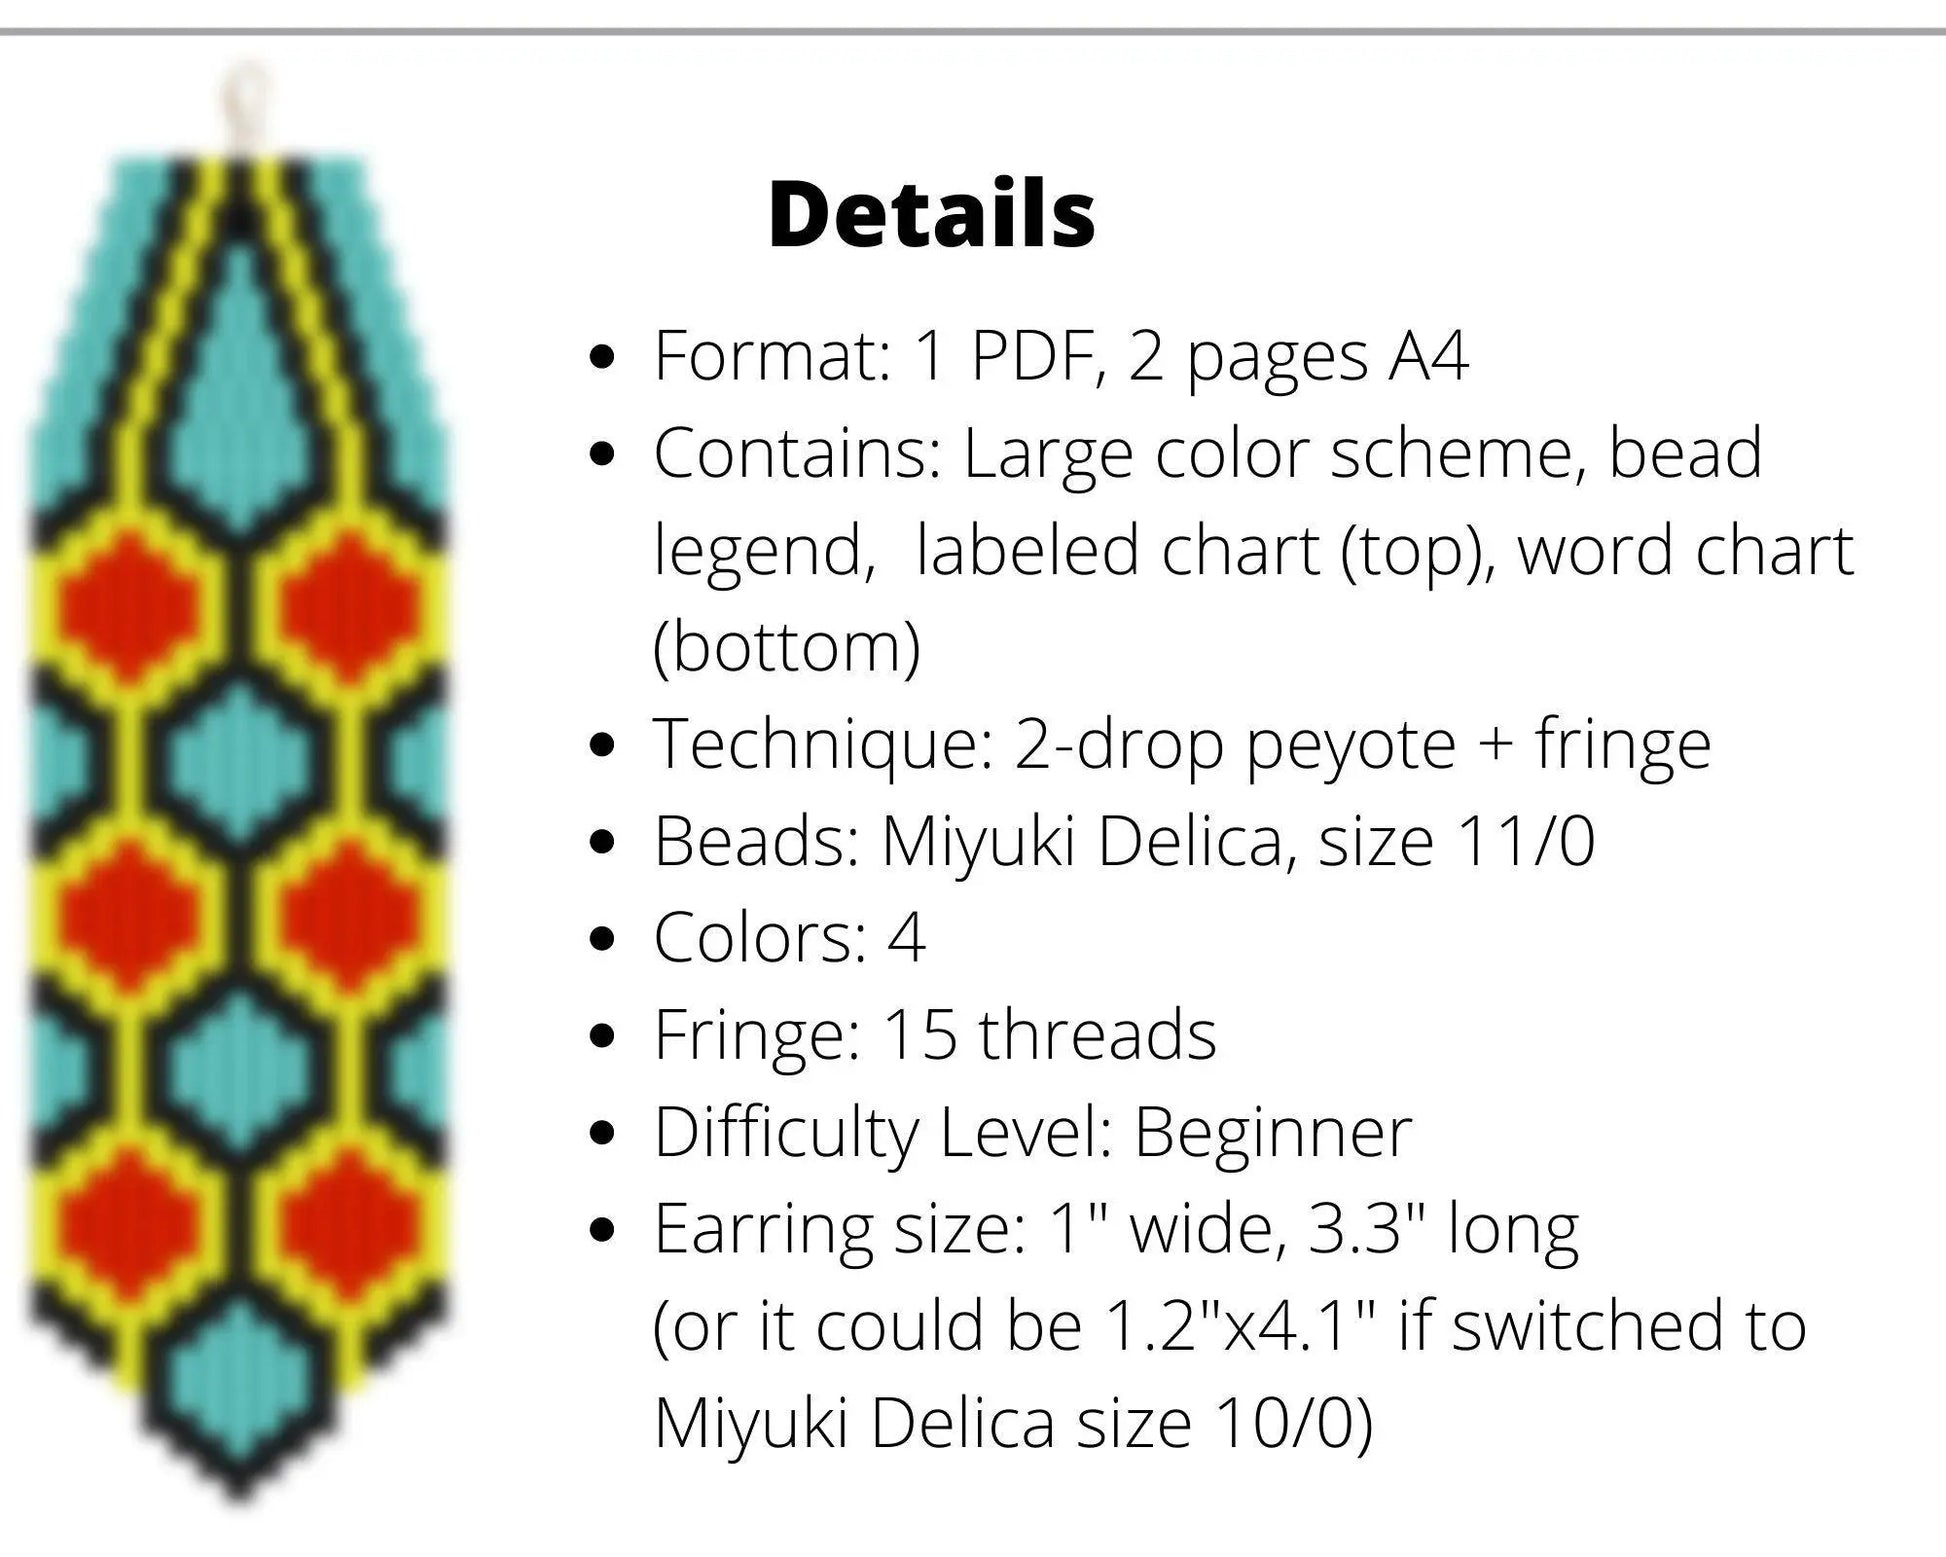 Hexagon Ornament Brick Stitch pattern for fringe beaded earrings - NikoBeadsUA